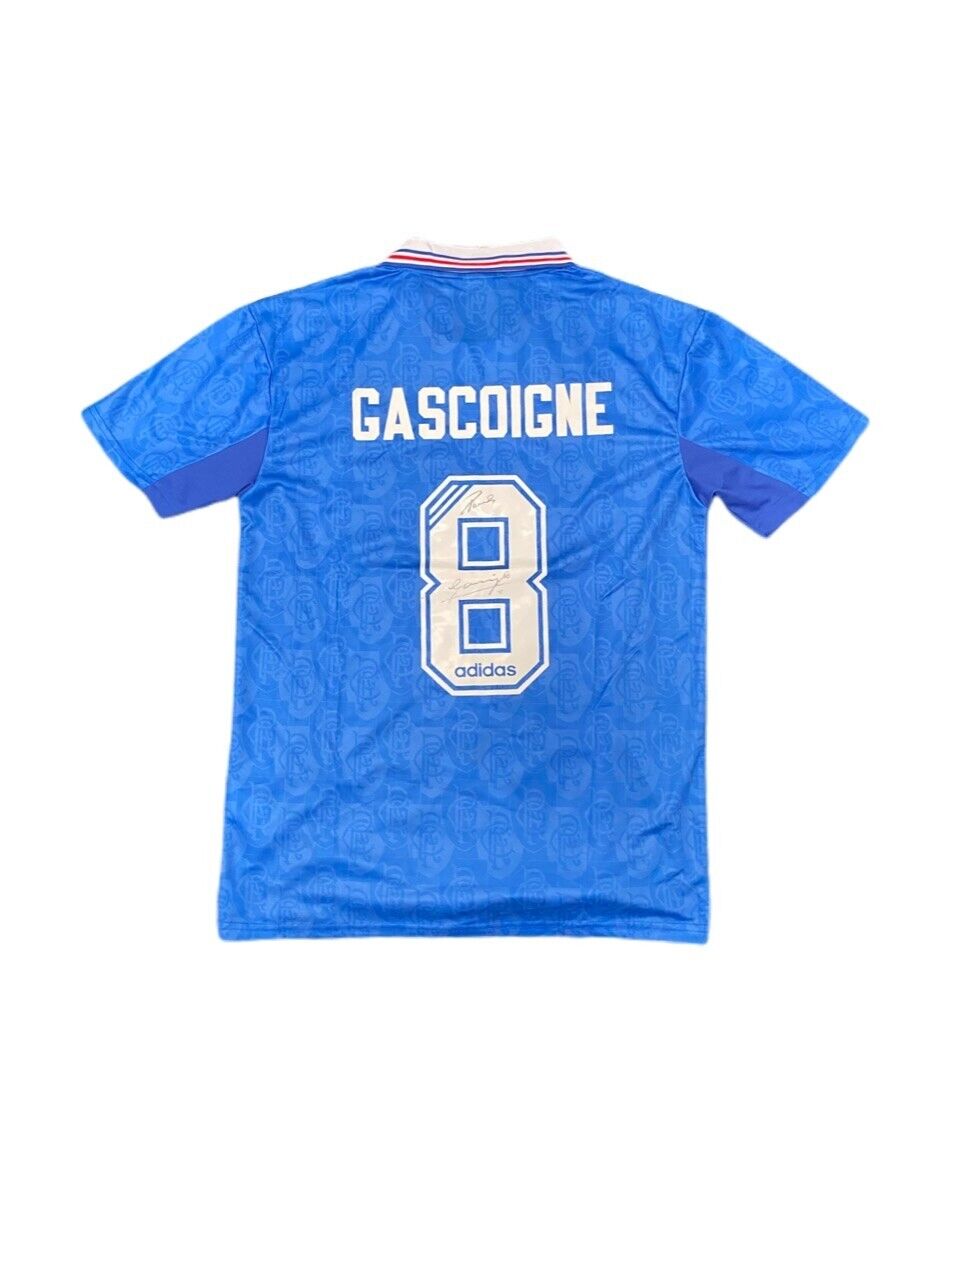 Paul Gascoigne Signed Rangers Football Shirt 1996/1997 Number 8